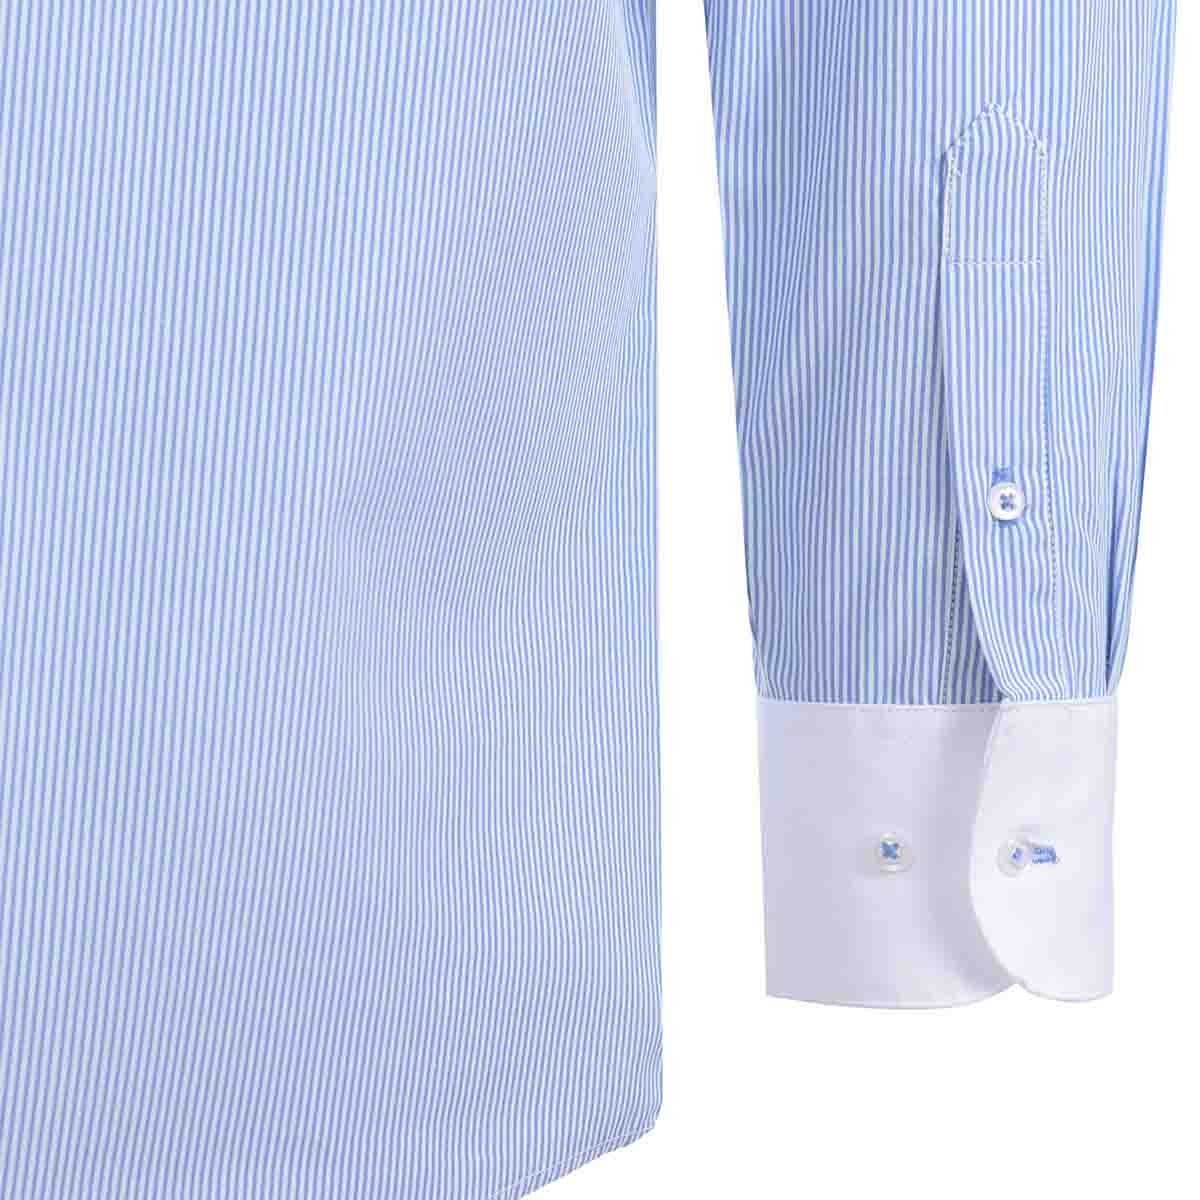 Camisa de Vestir Color Azul Combinado Nina Ricci para Caballero